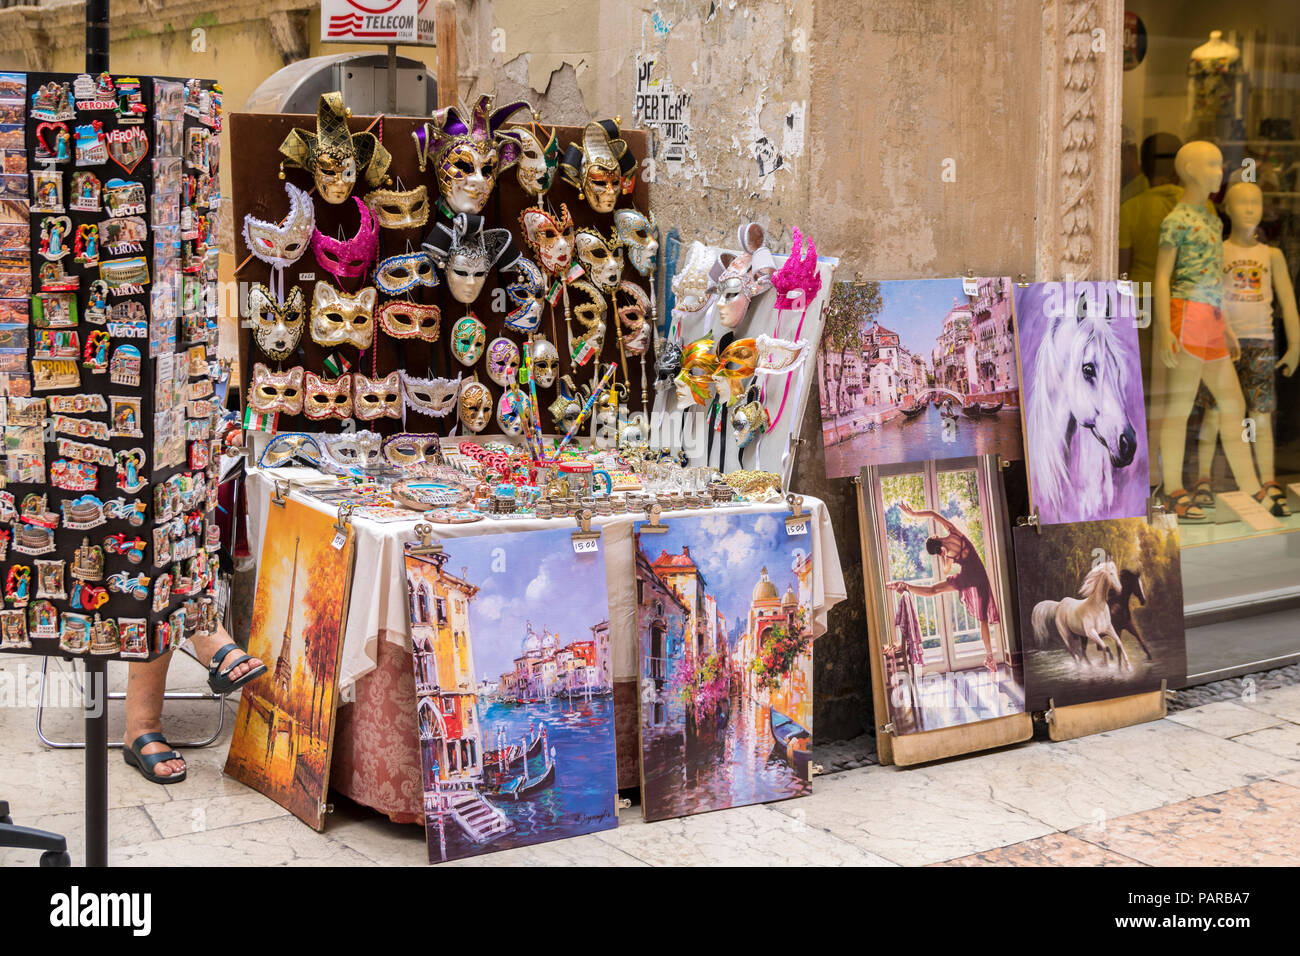 Art stall on a street in Verona italy, market stall, masquerade carnival masks, italiian street stall, vender, oil paintings, artwork on sale Stock Photo